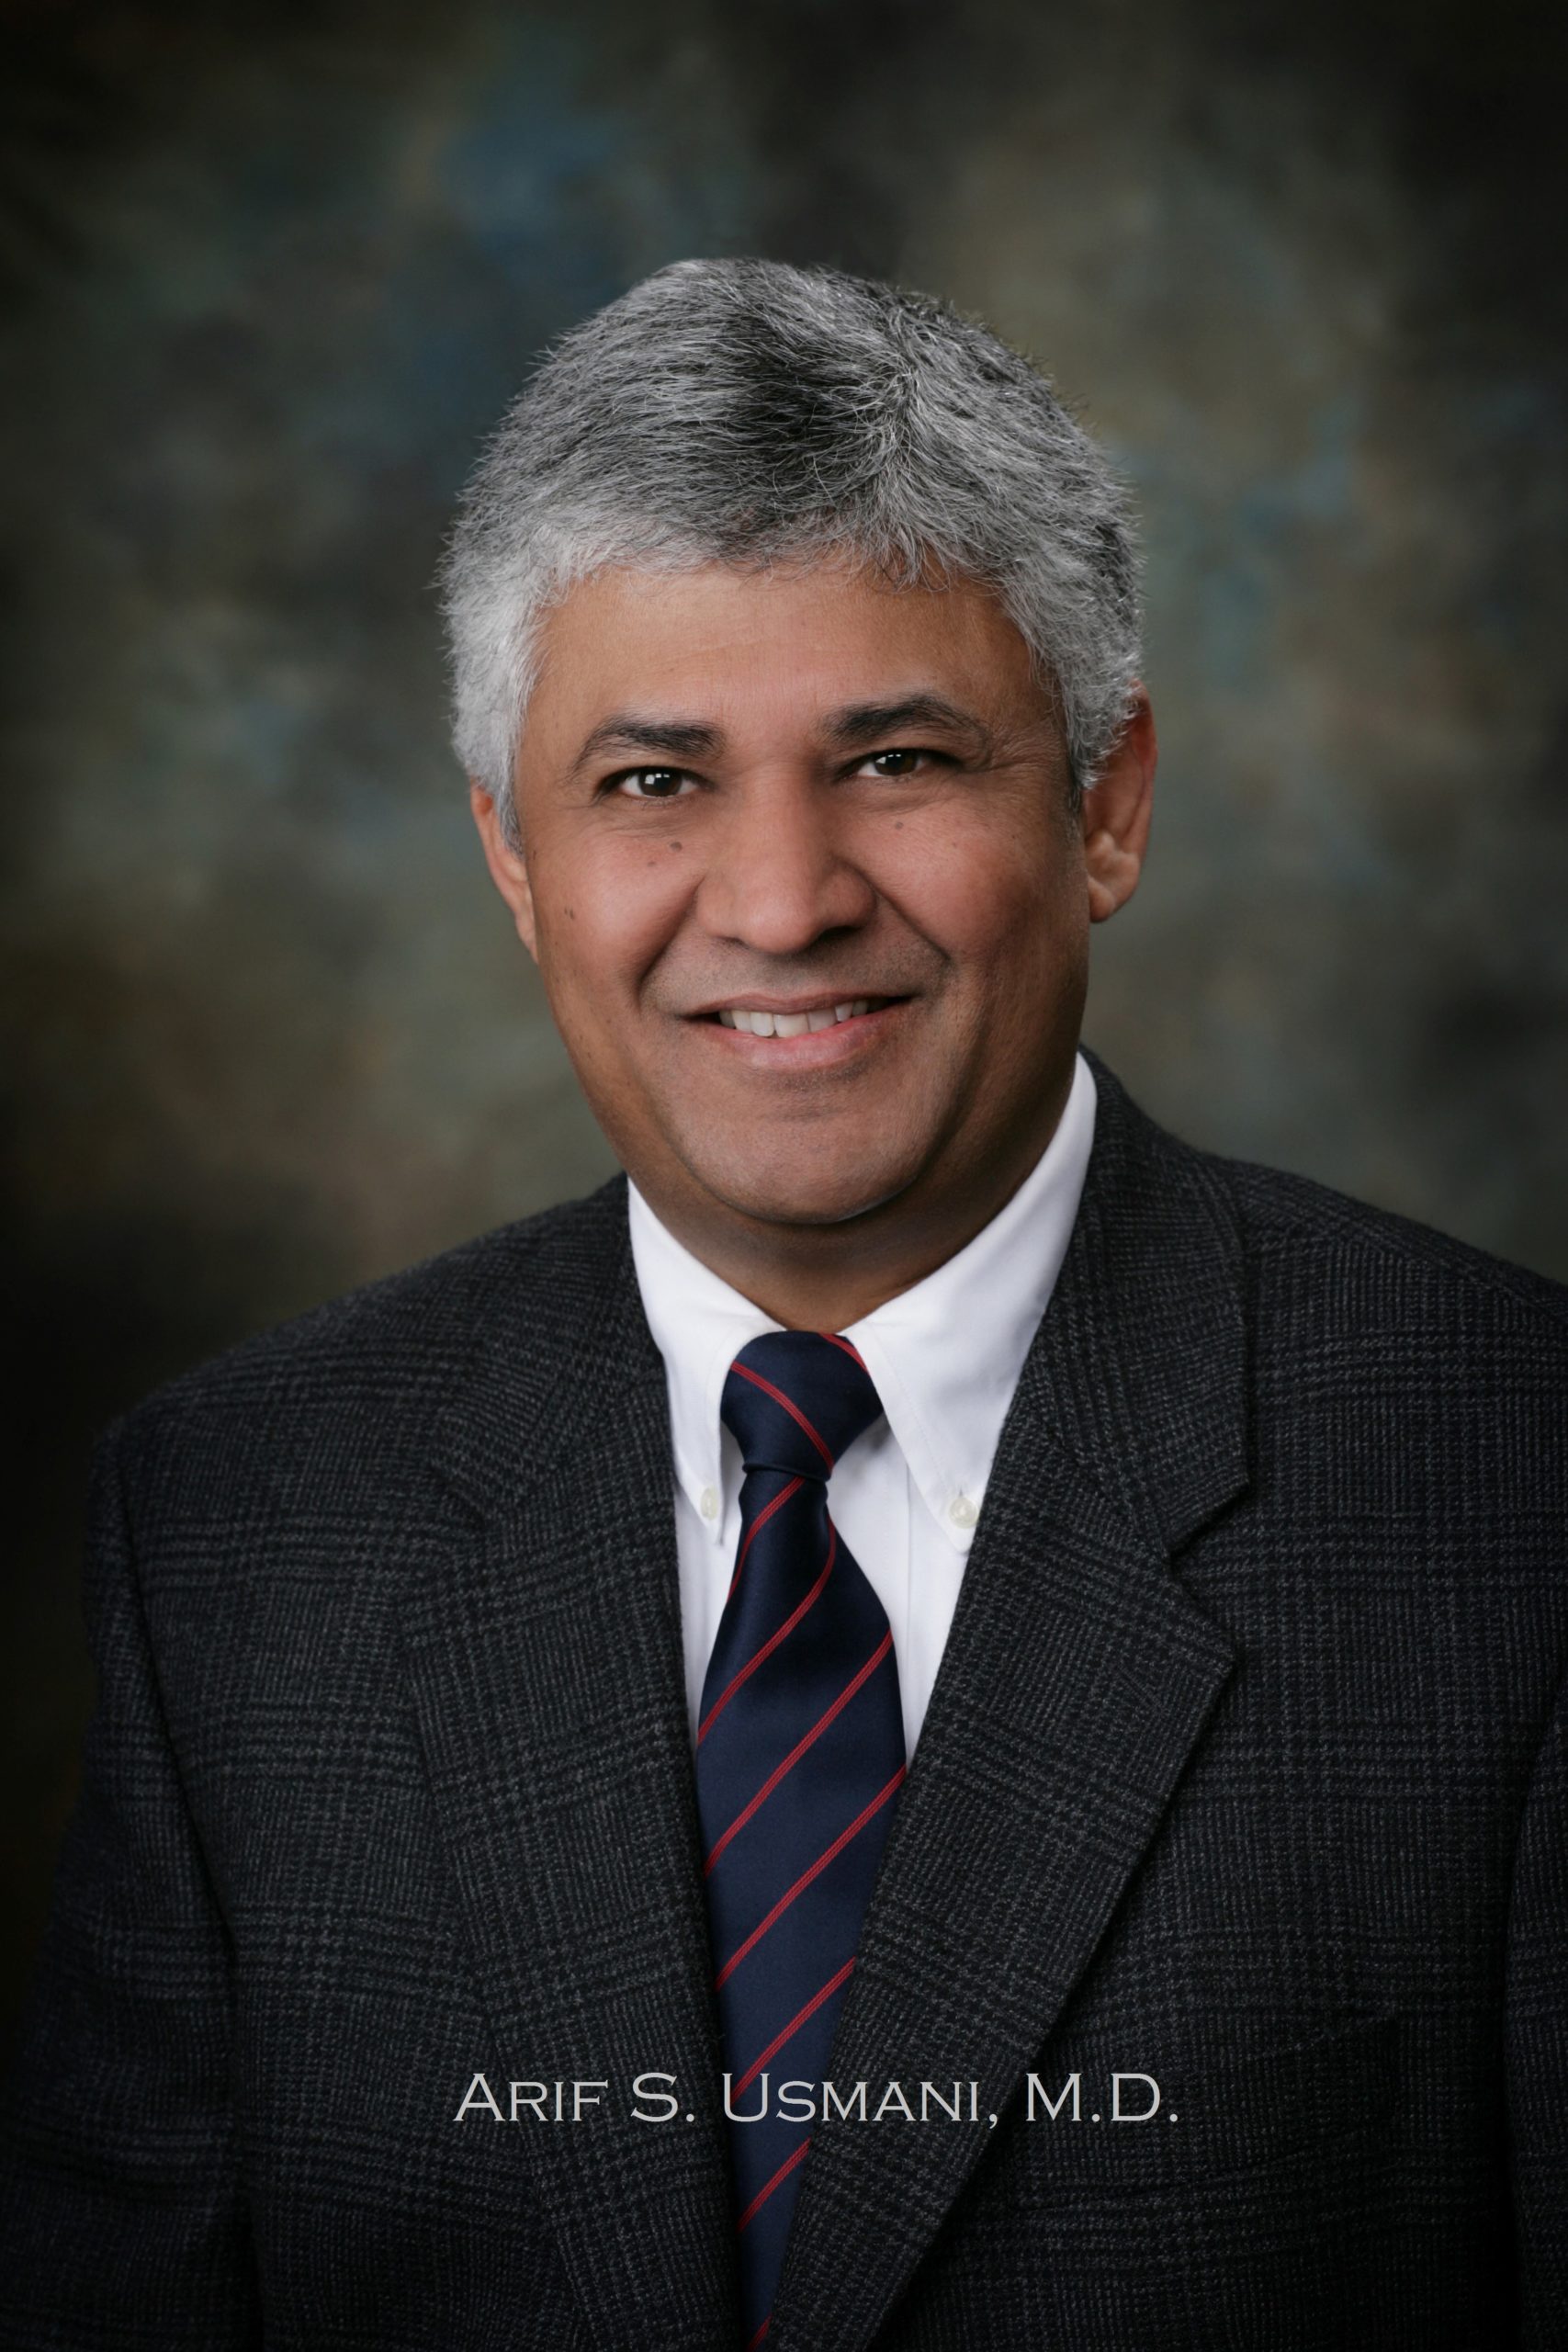 Arif S. Usmani, M.D.